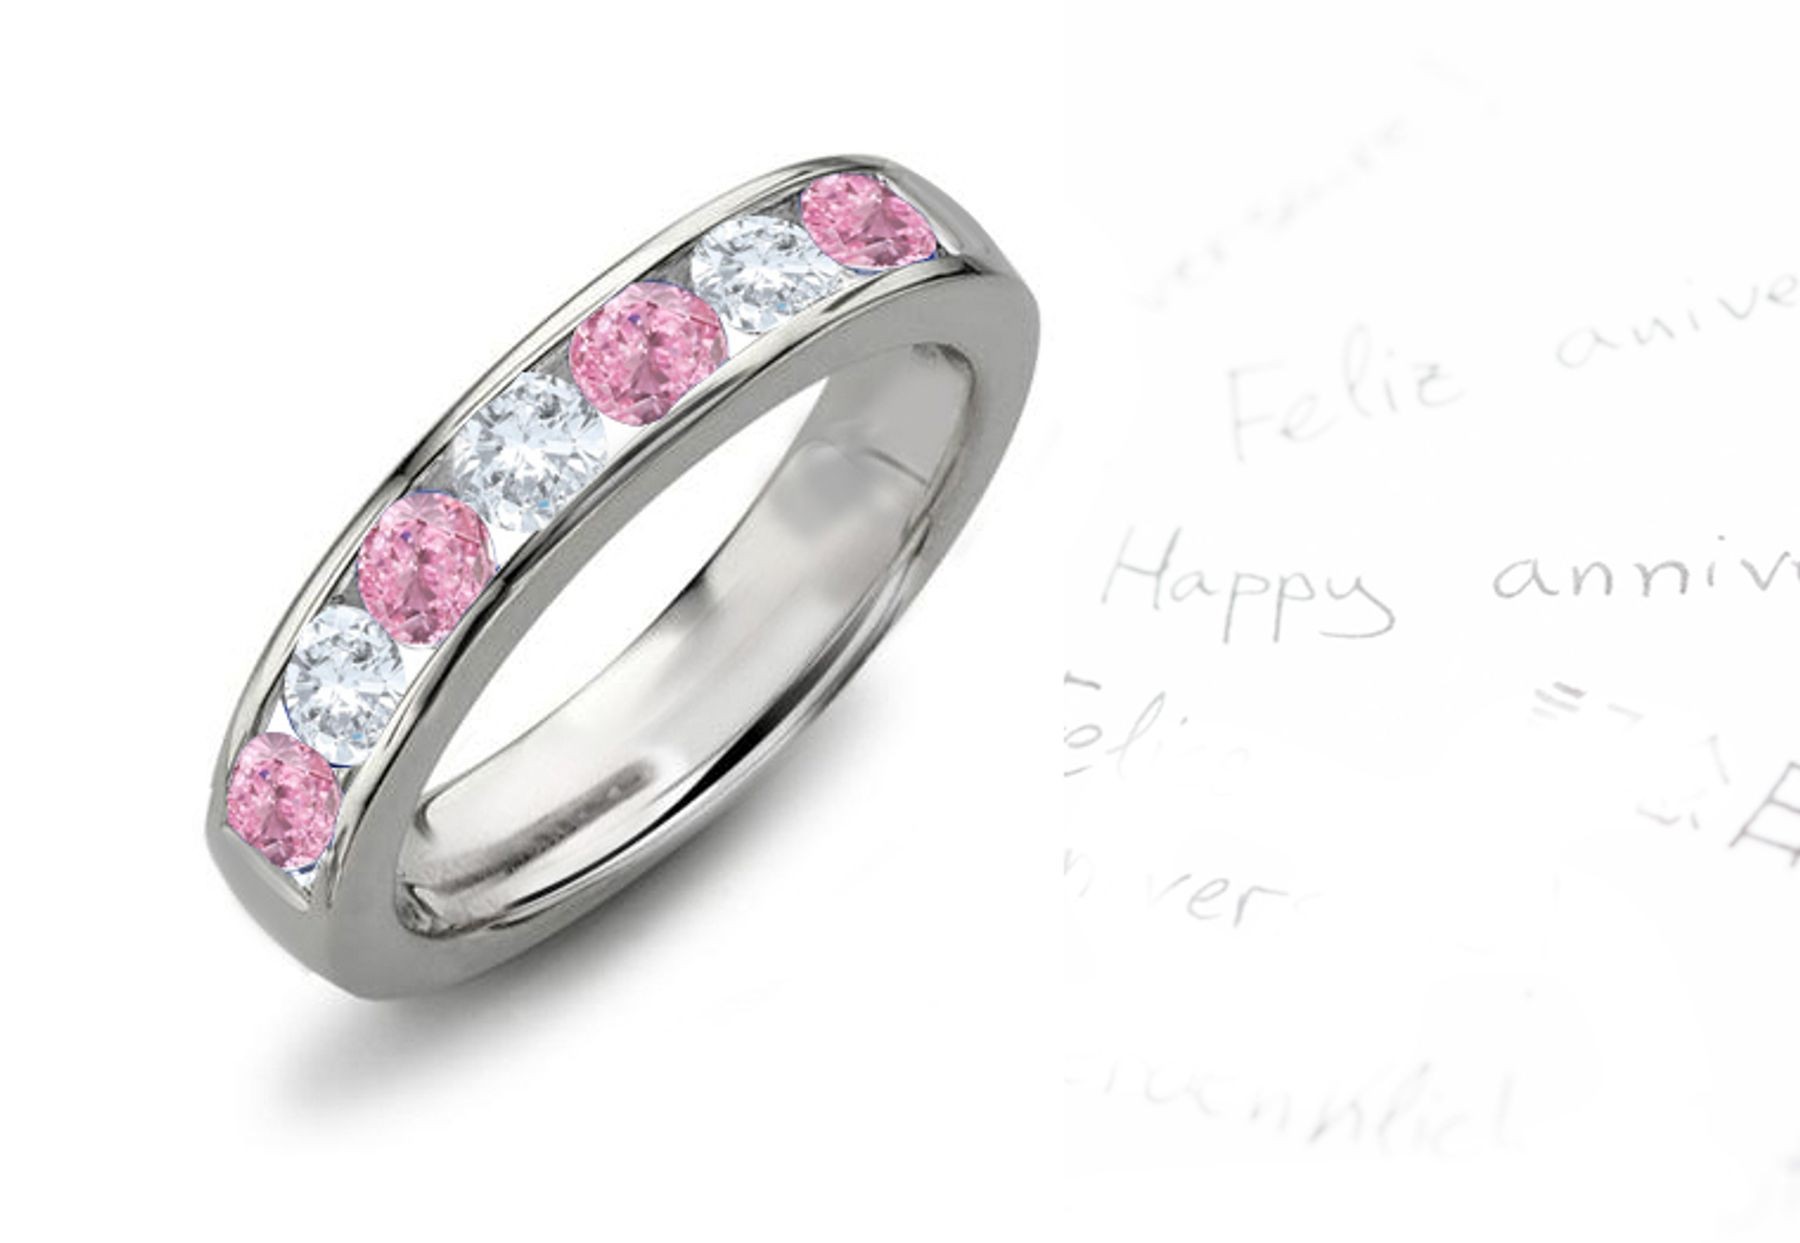 Premier Designer Colored Diamonds Collection - Colored Diamonds & White Diamonds Fancy Diamond Wedding & Anniversary Rings